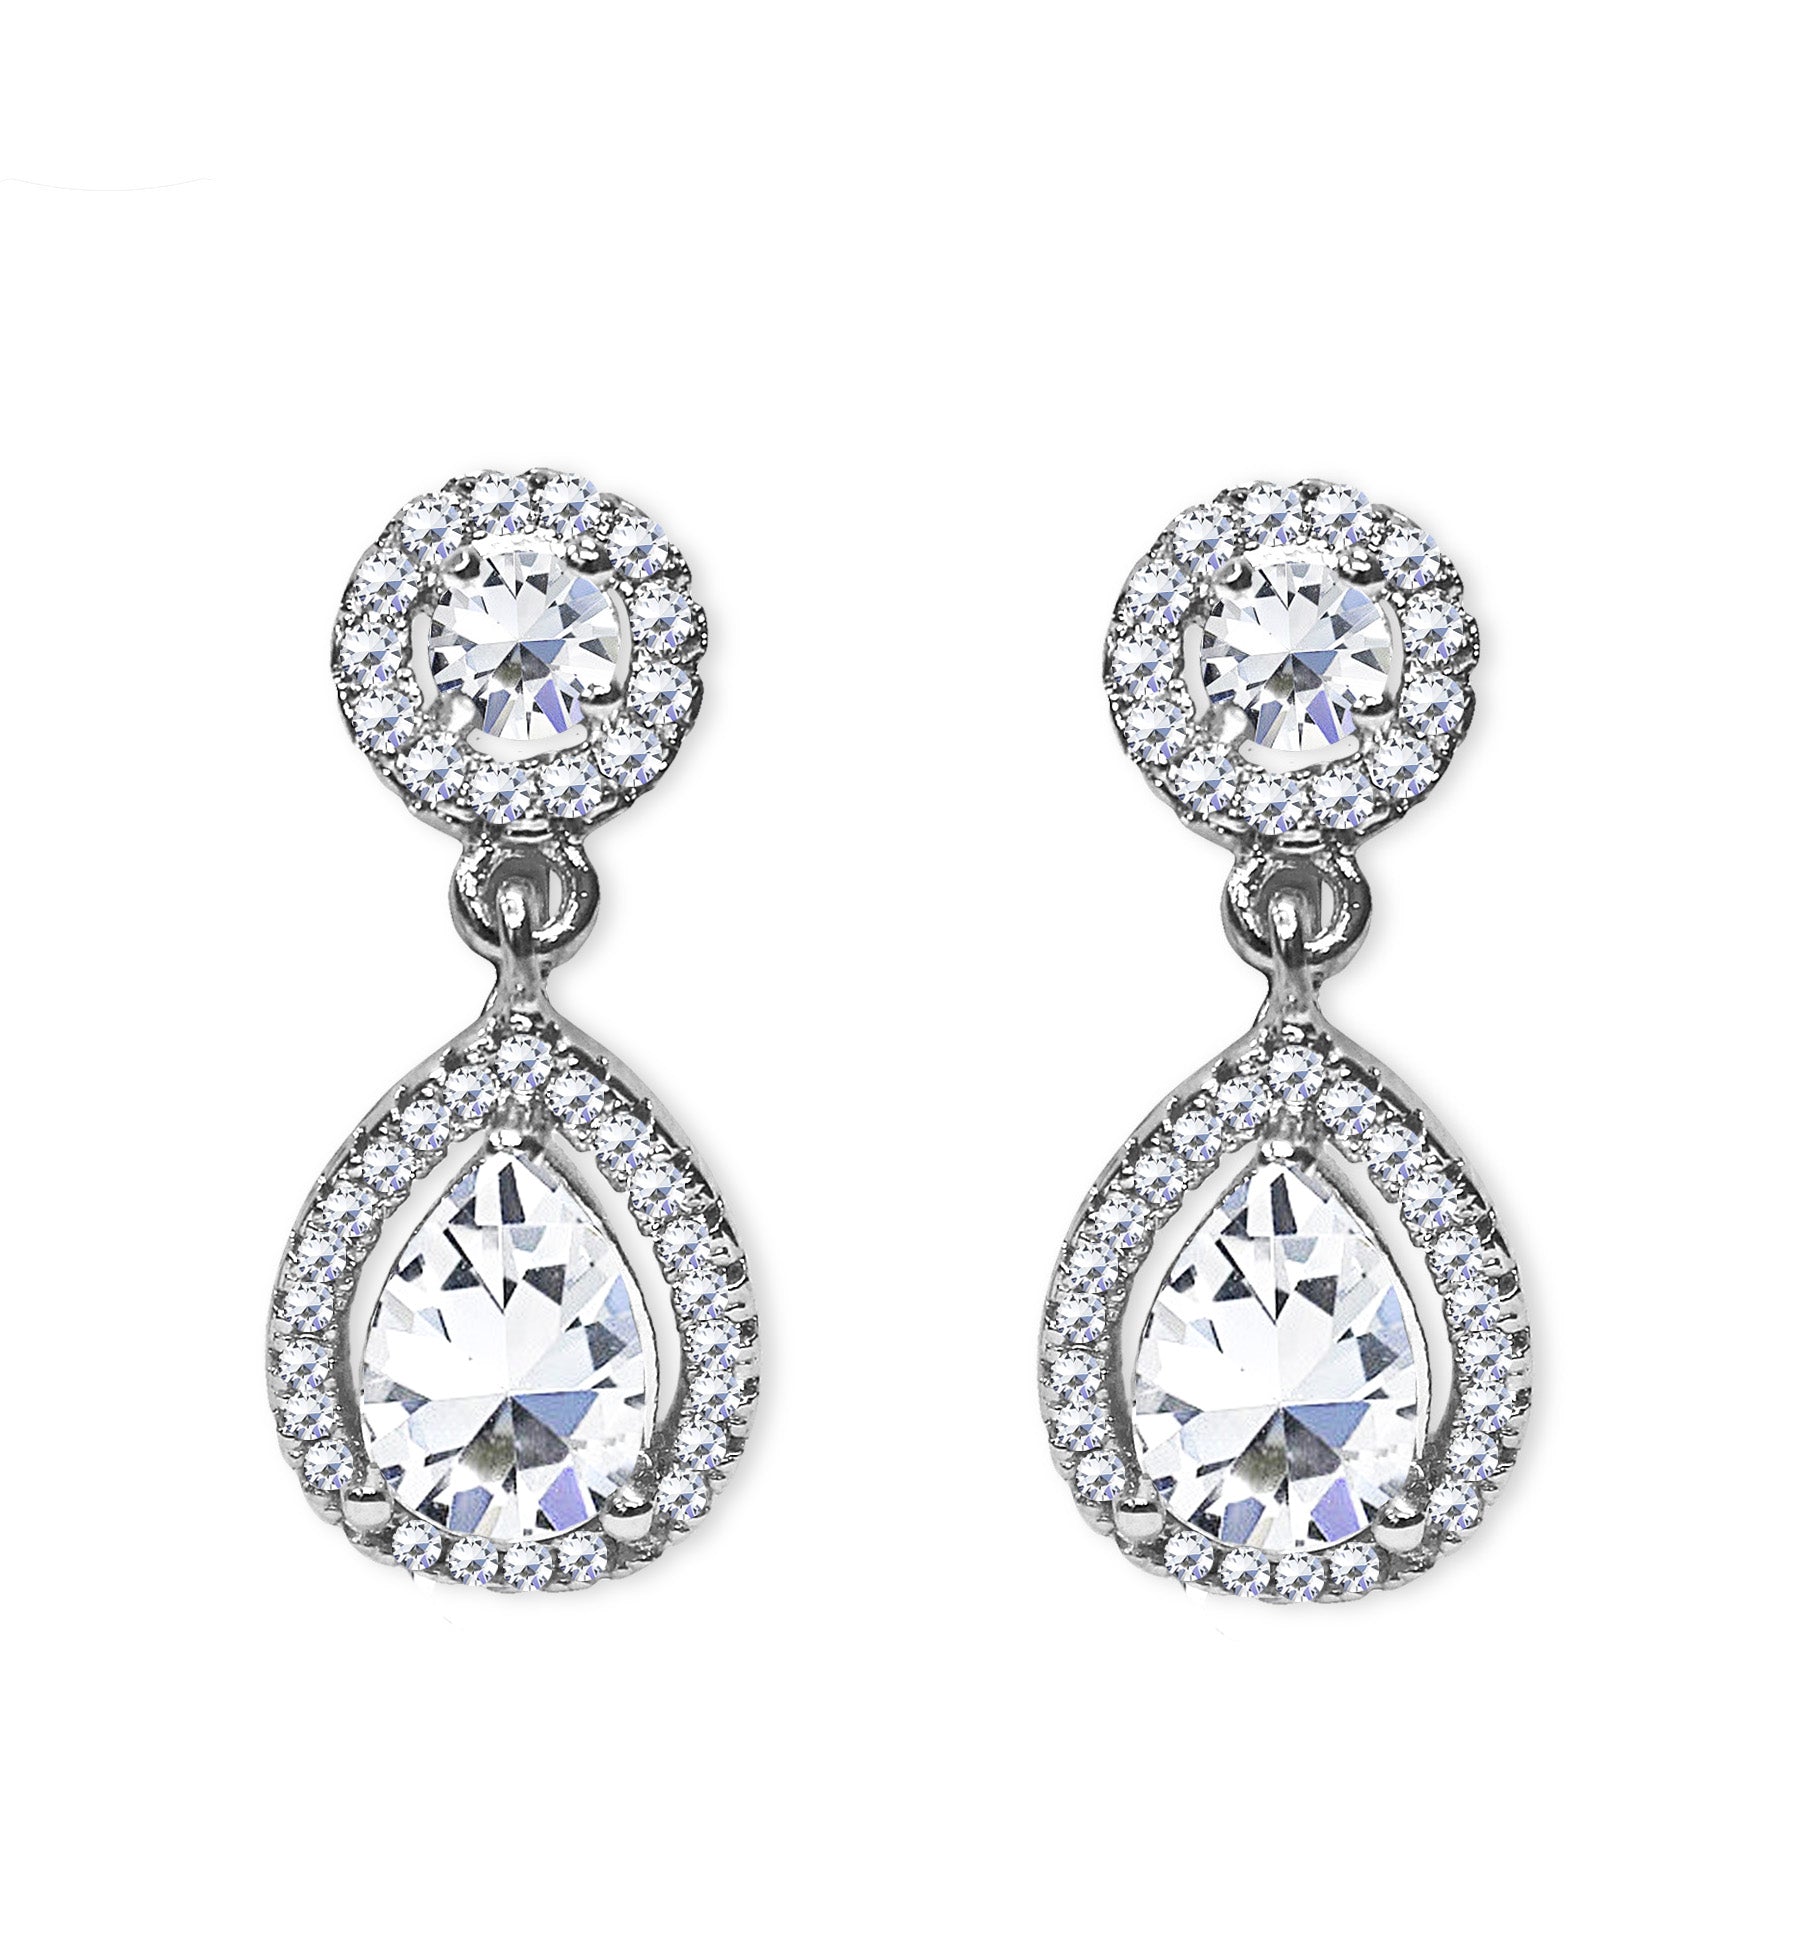 CLIP ON Earrings Oval Drop Crystal Women Ladies Clipon Silver Bridal